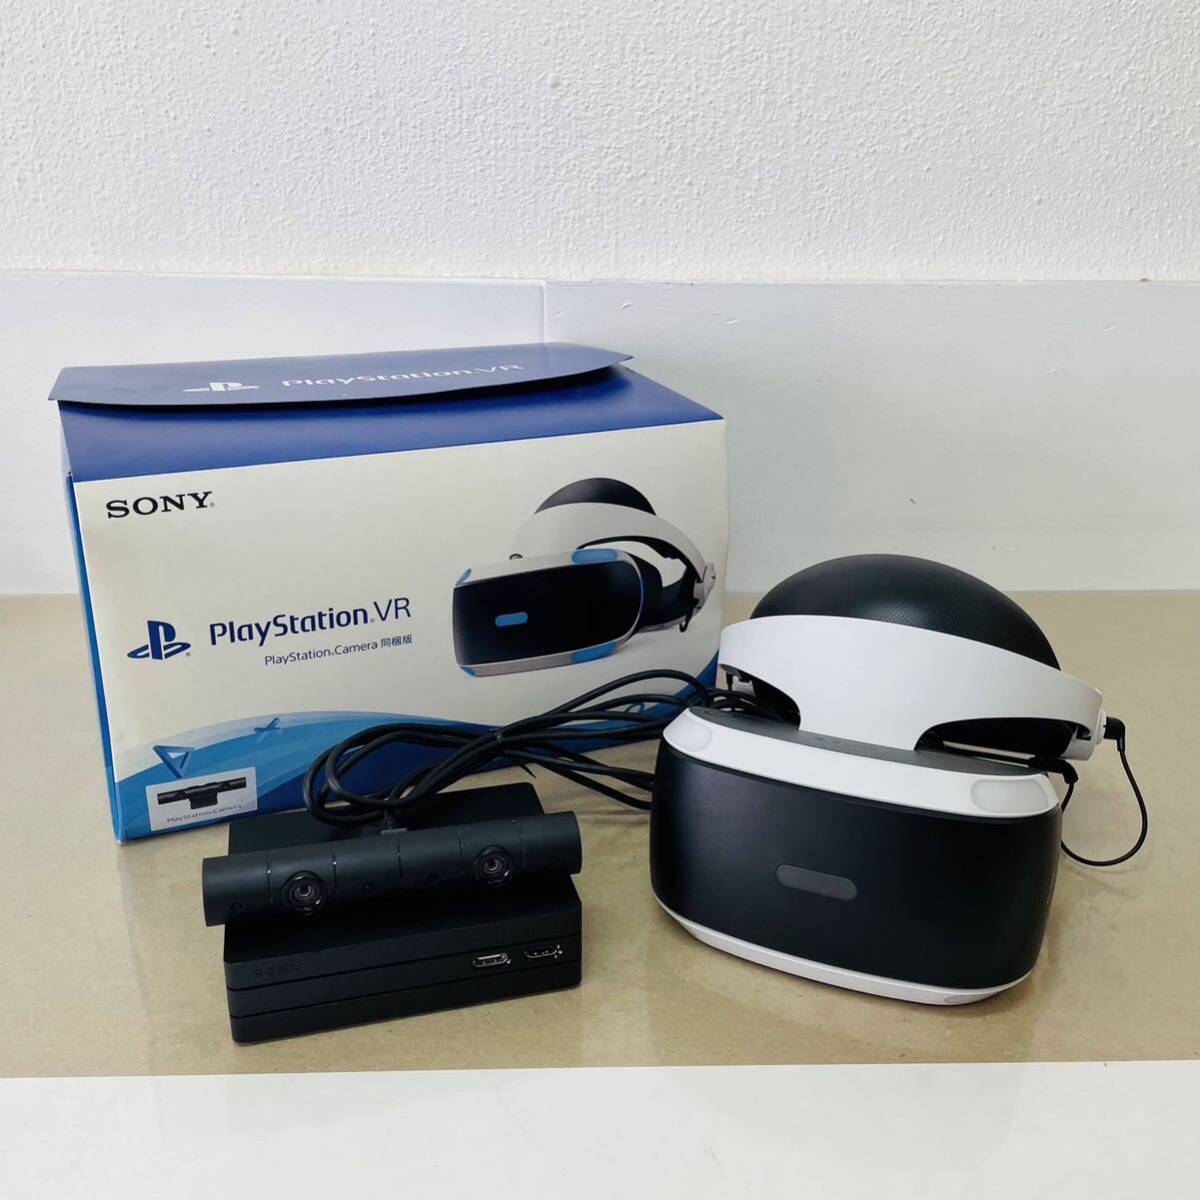  PlayStation VR SONY camera 同梱版  PSVR CUH-ZVR2 動作良好  i17613  100サイズ発送 の画像1